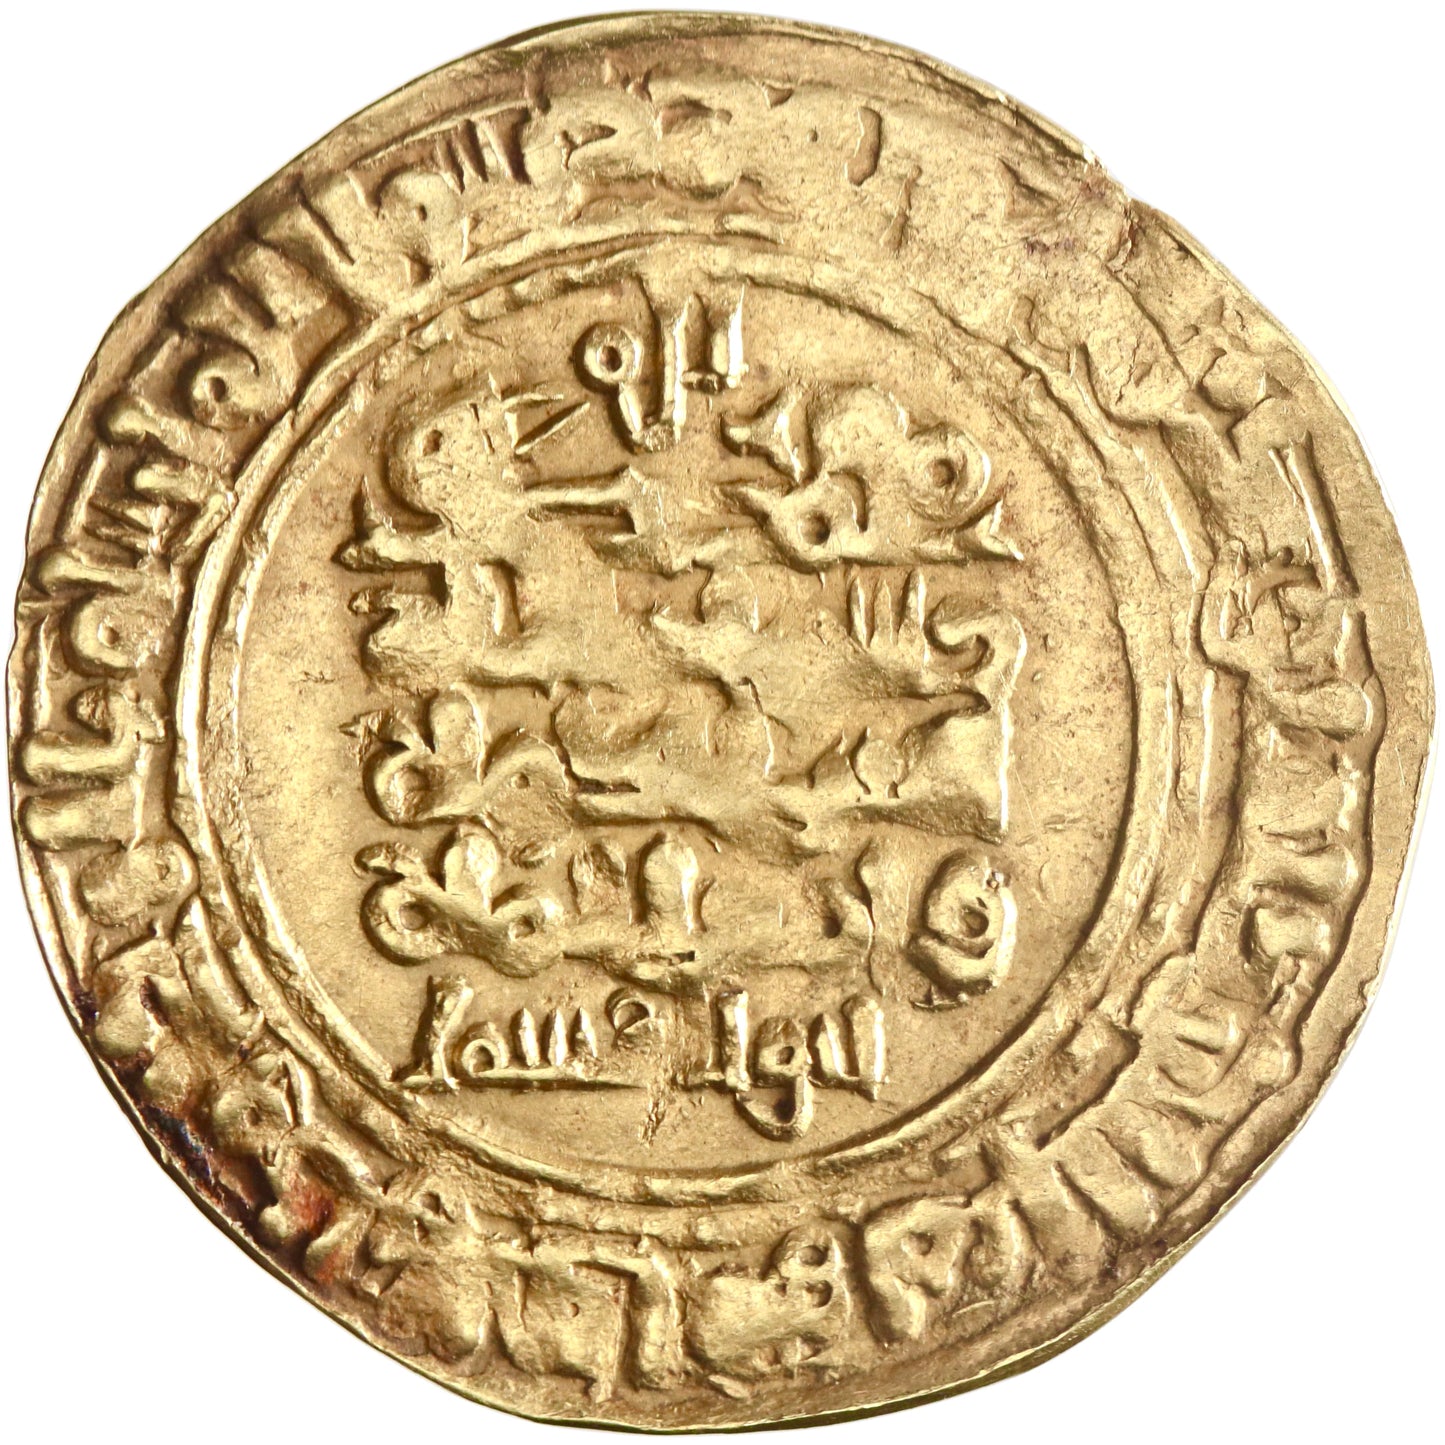 Ghaznavid, Mahmud ibn Sebuktegin, gold dinar, Naysabur (Nishapur) mint, AH 416, citing al-Qadir